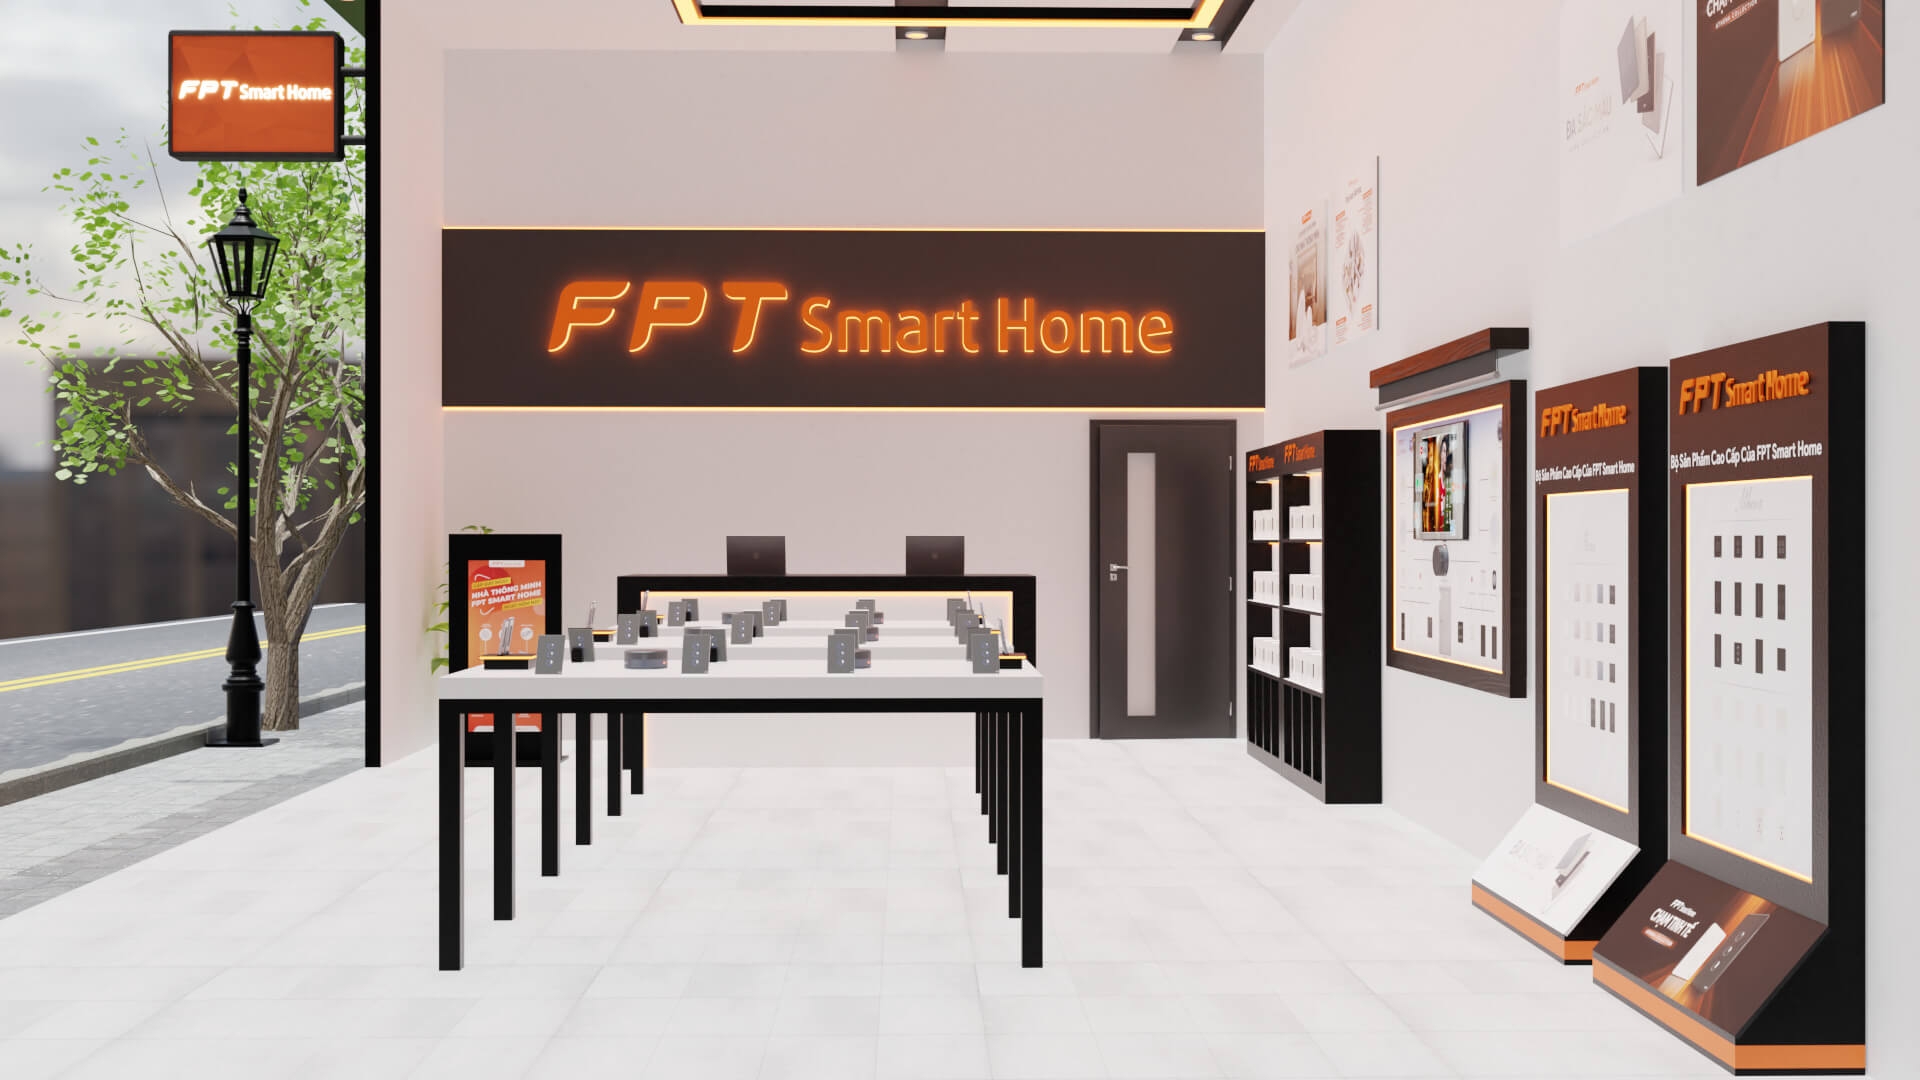 Chuỗi BrandShop FPT Smart Home